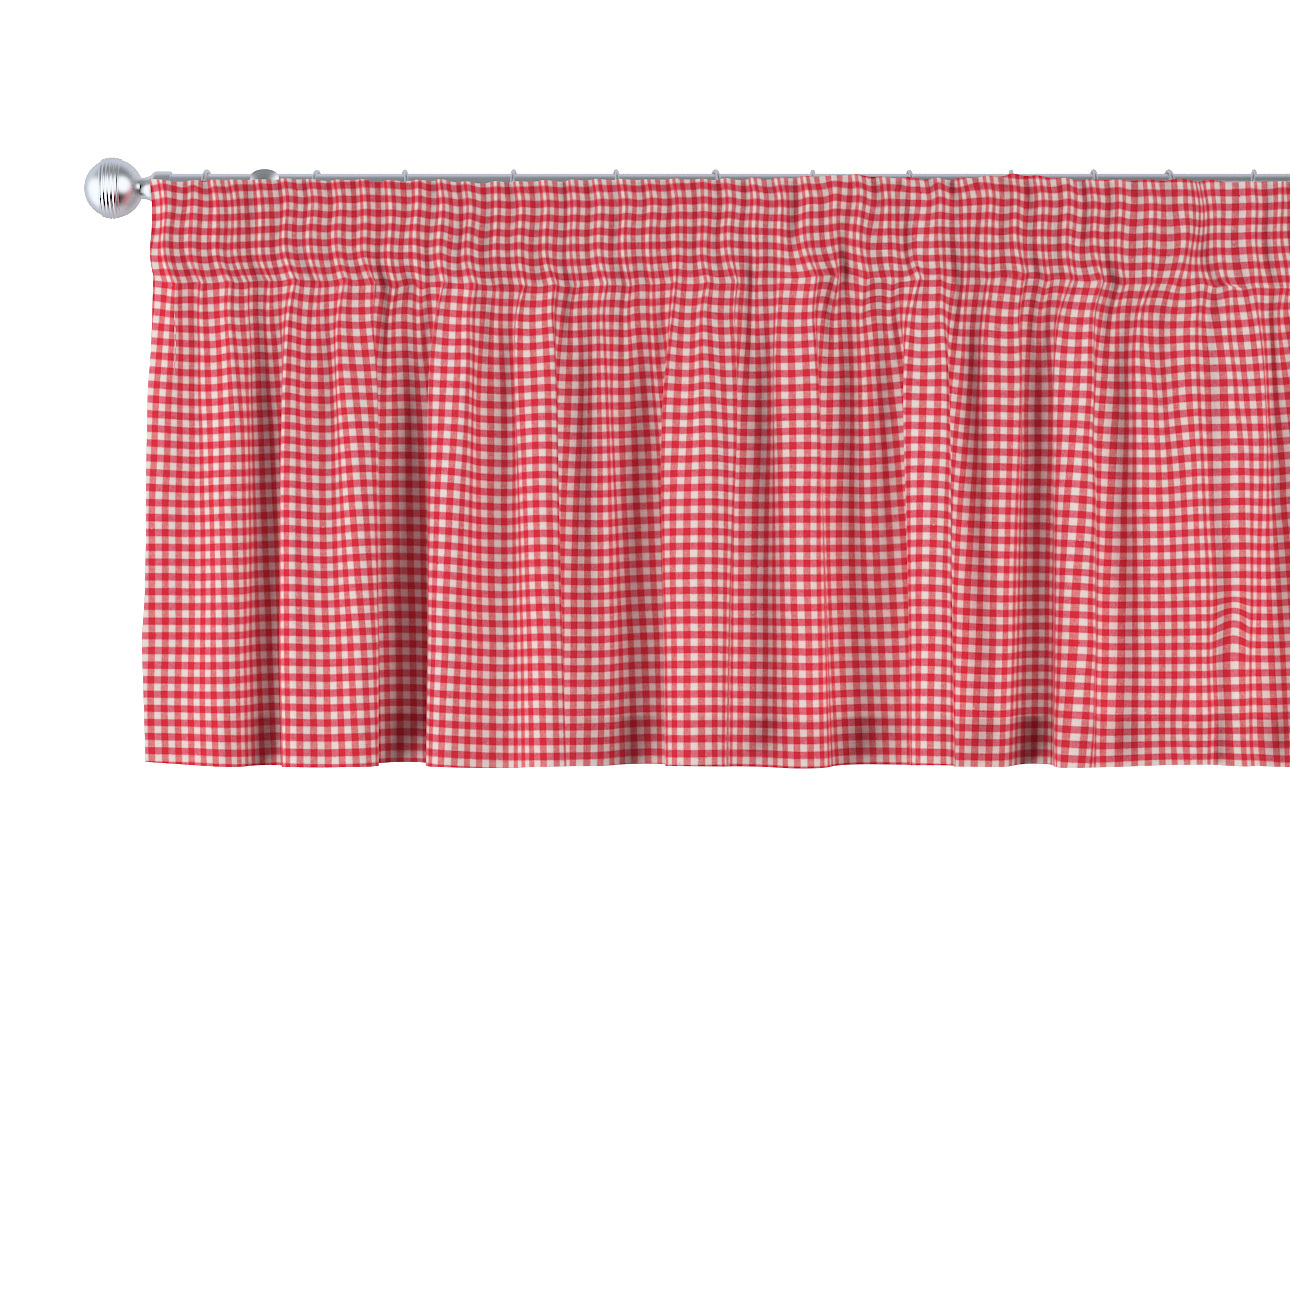 Kurzgardine mit Kräuselband, rot-ecru , 130 x 40 cm, Quadro (136-15) günstig online kaufen